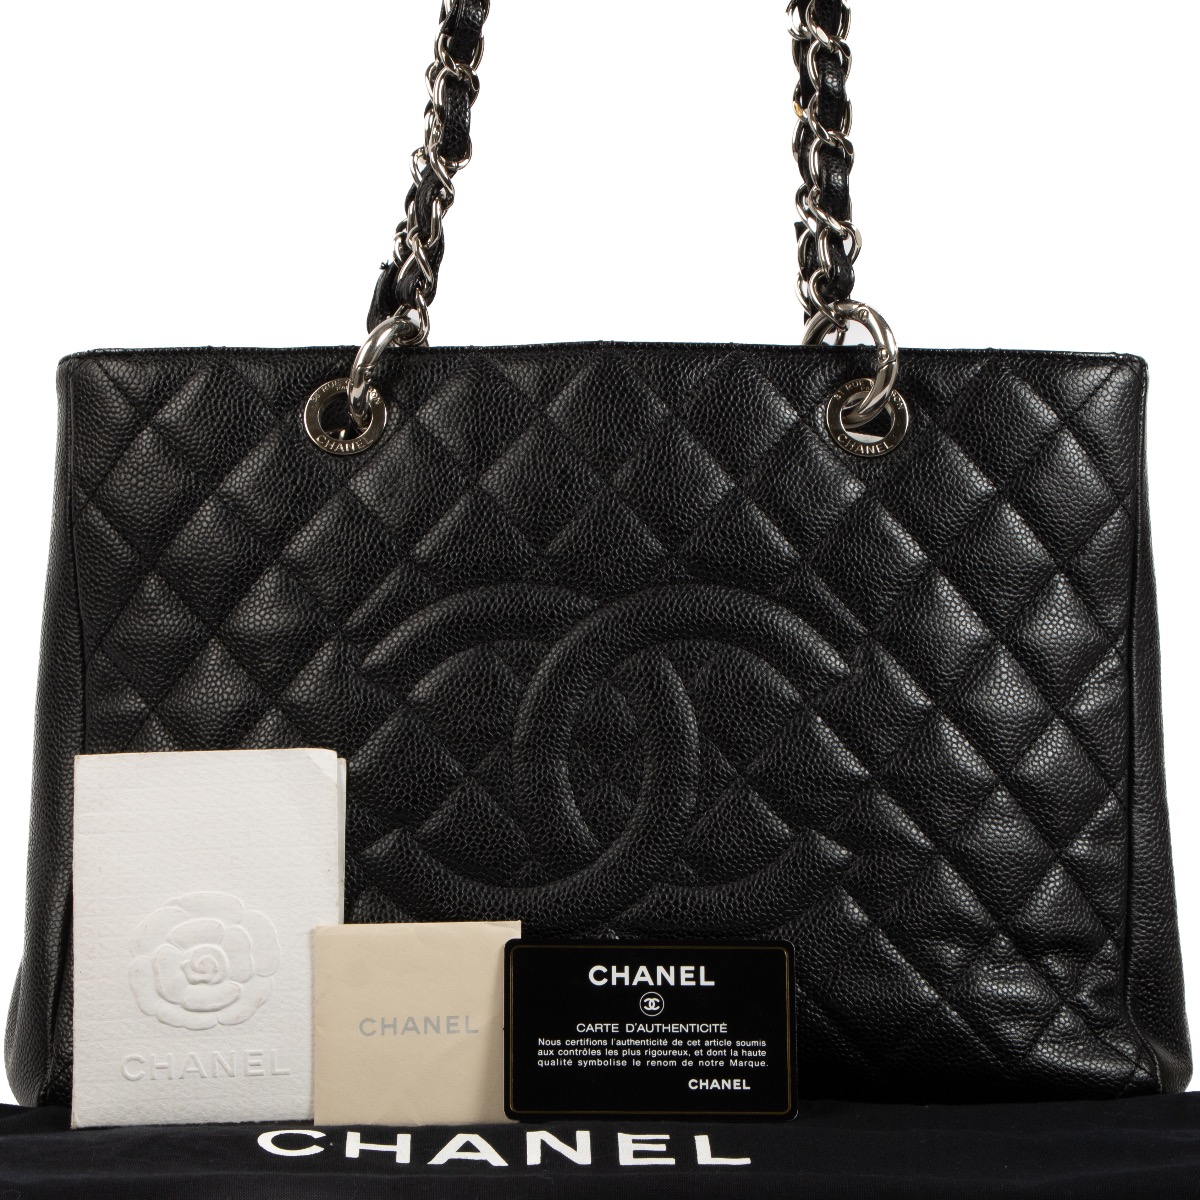 Chanel Black Caviar Tote Bag - 77 For Sale on 1stDibs